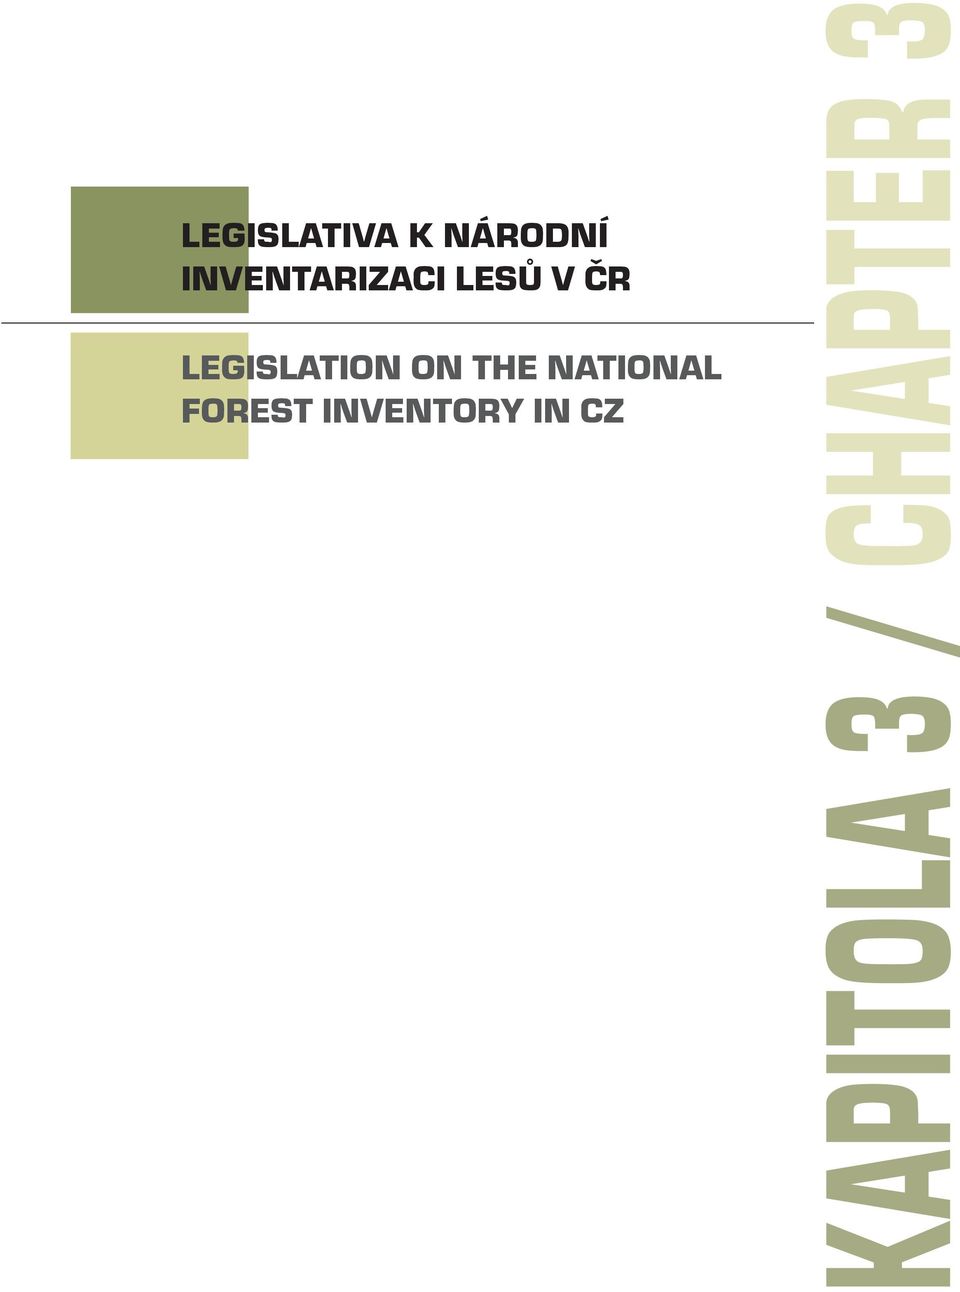 Legislation on the National